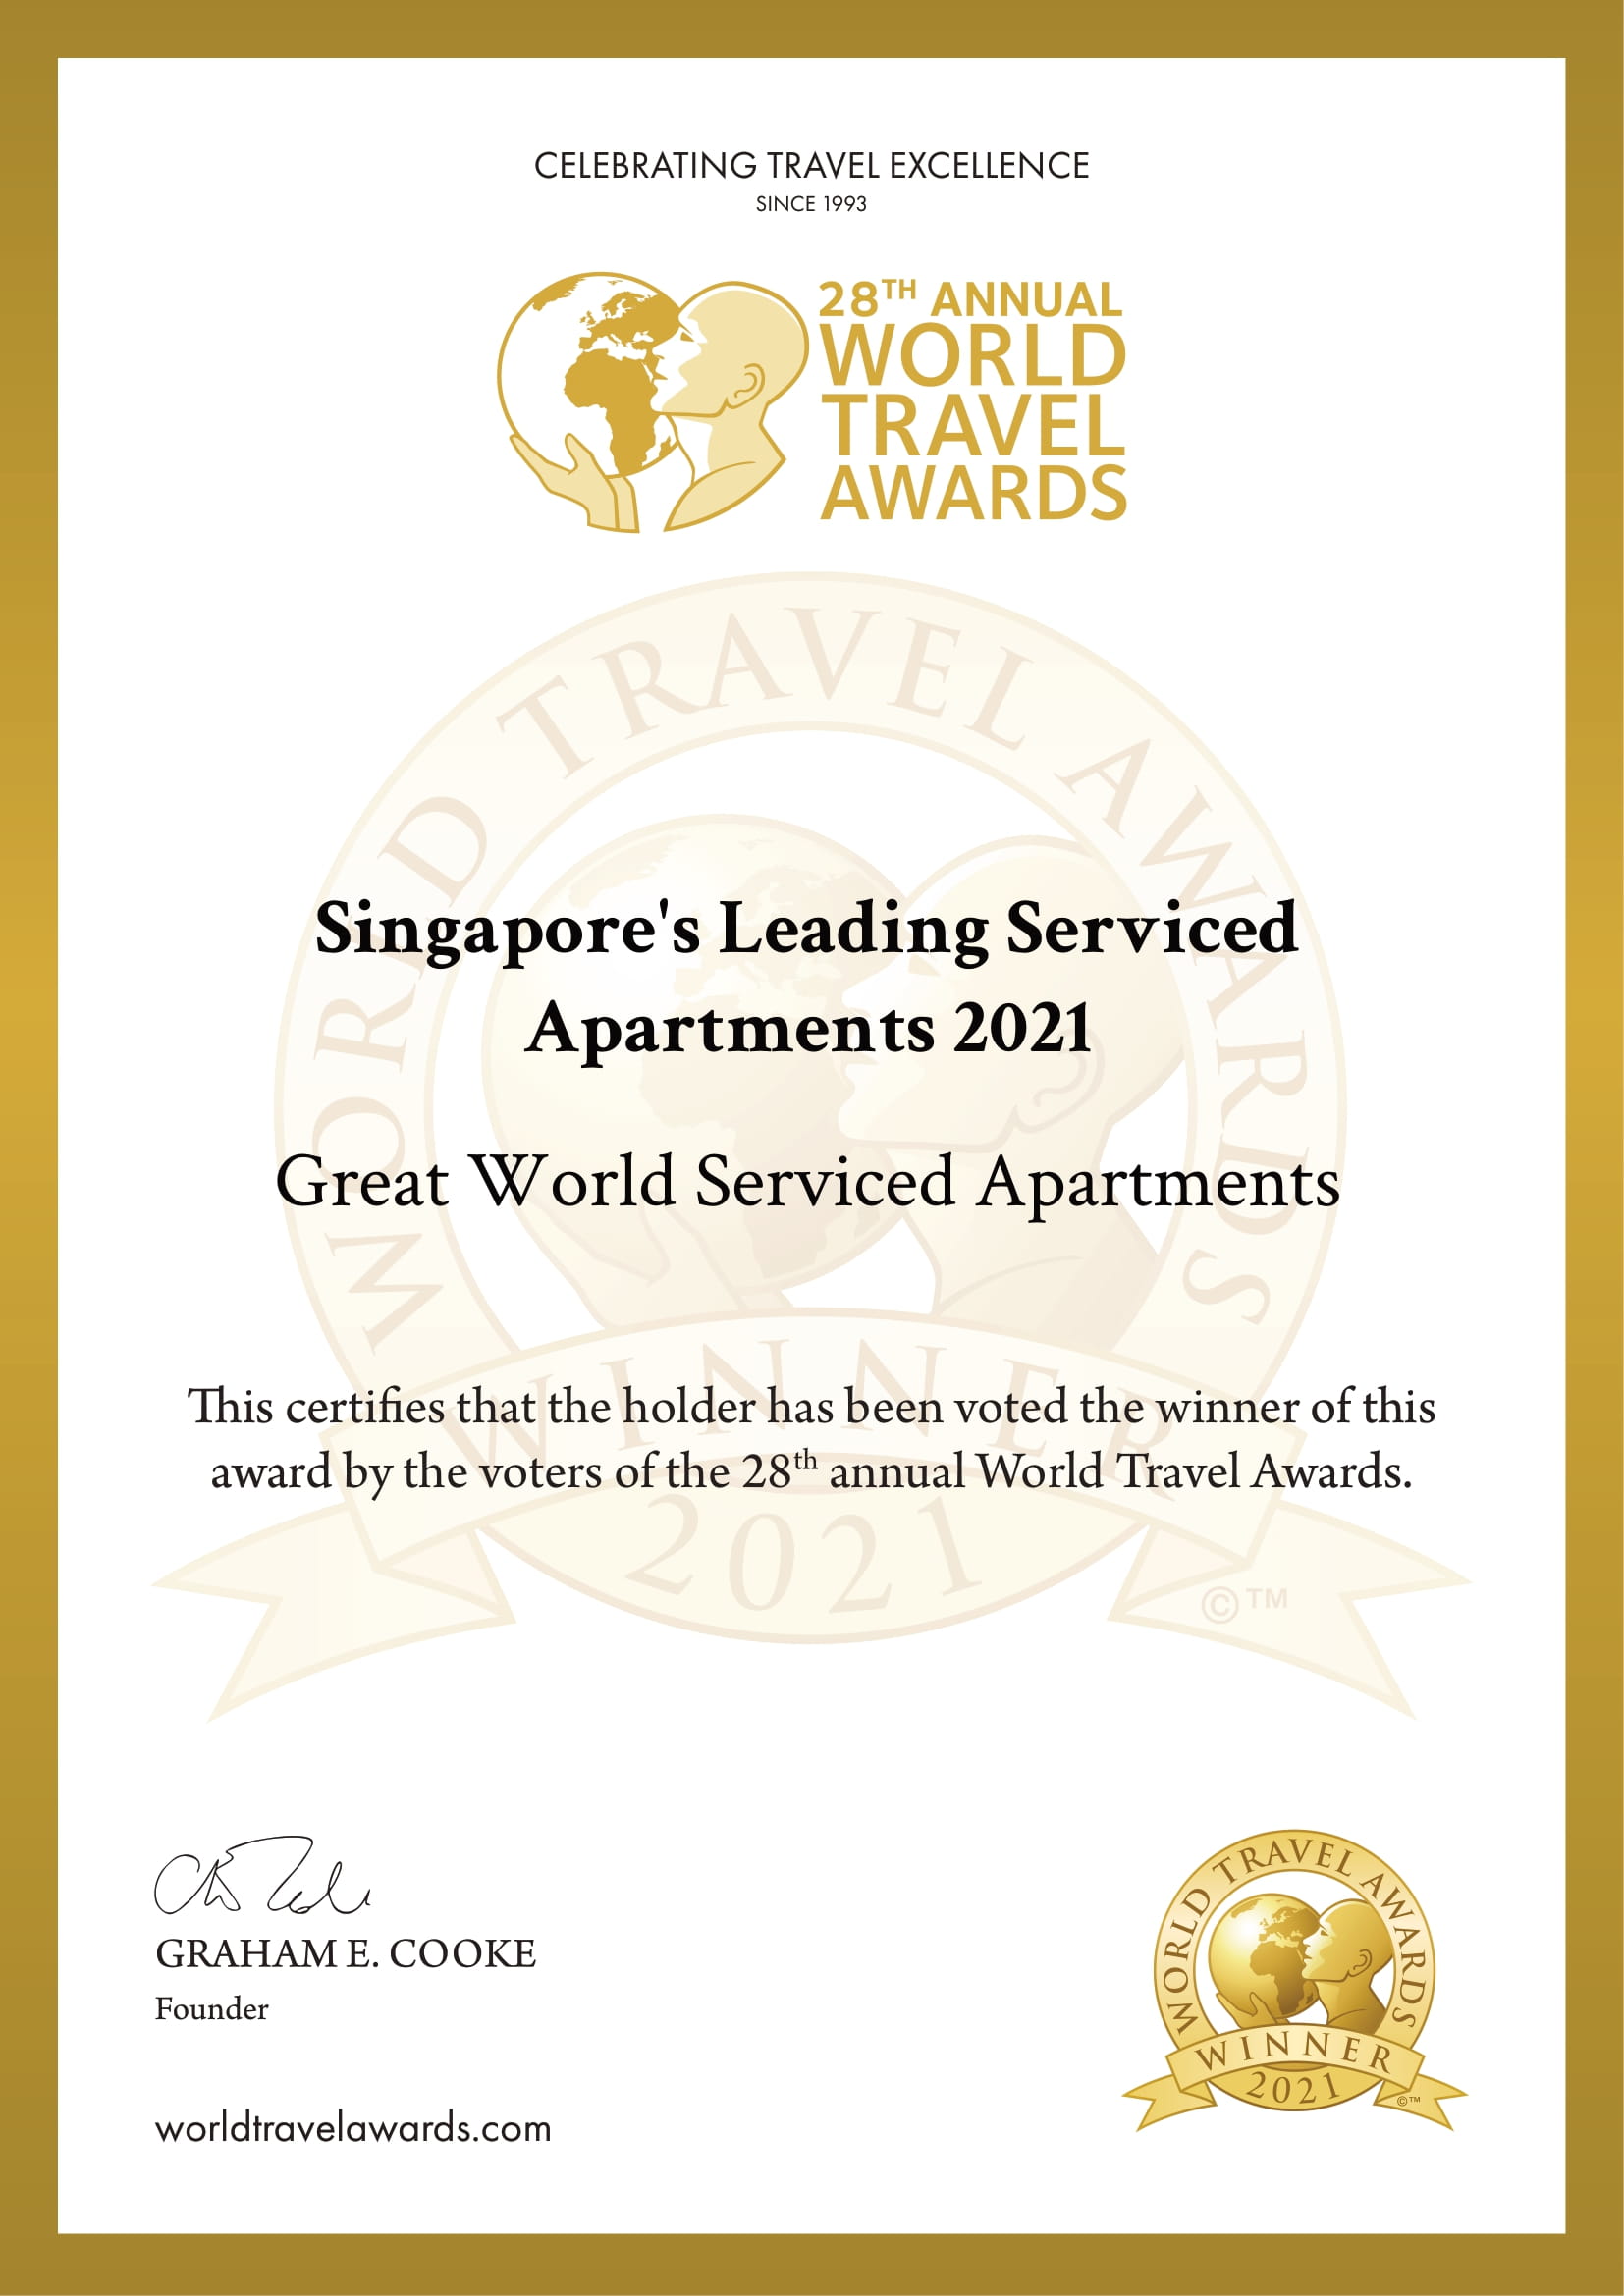 World Travel Awards Certificate 